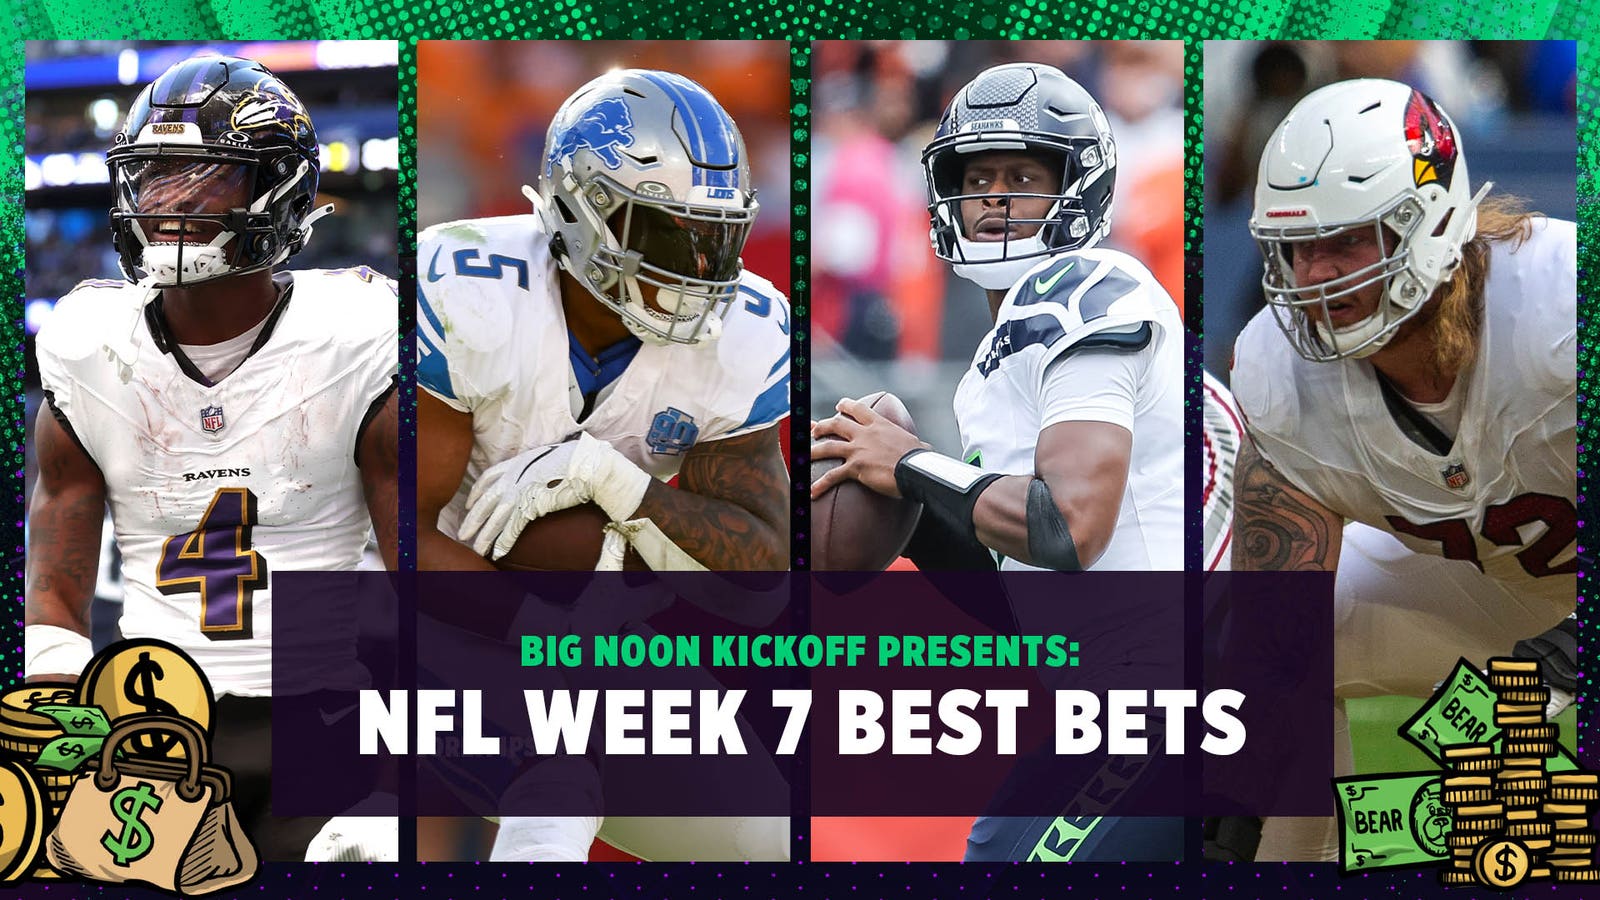 Ravens vs. Lions, Seahawks vs. Cardinals lead NFL Week 7 best bets